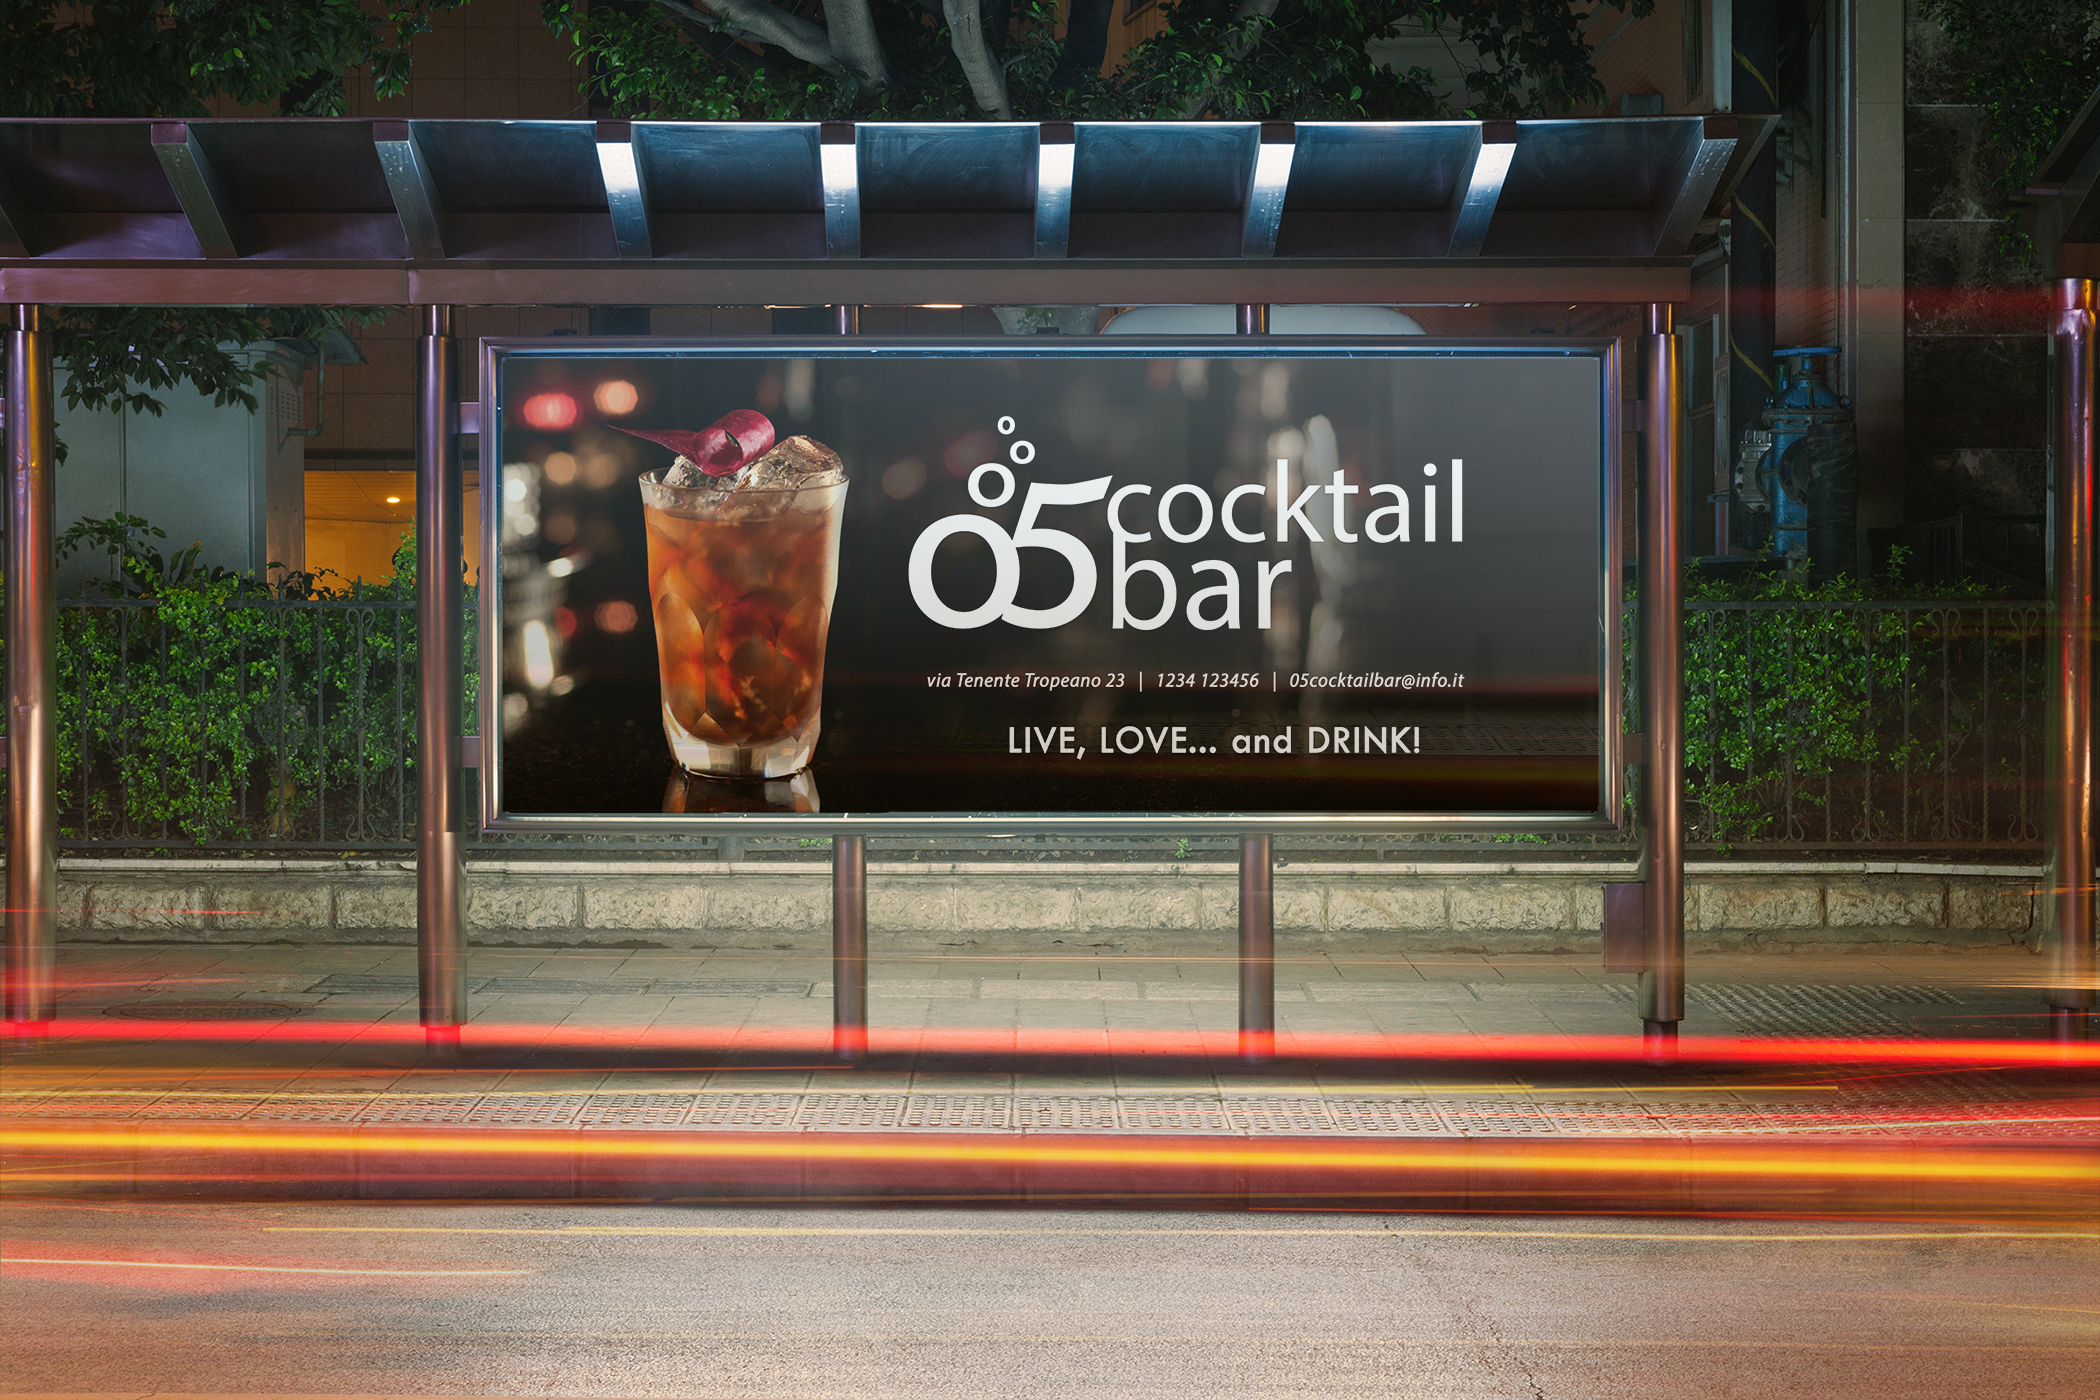 Cartellone pubblicitario 05 cocktail bar